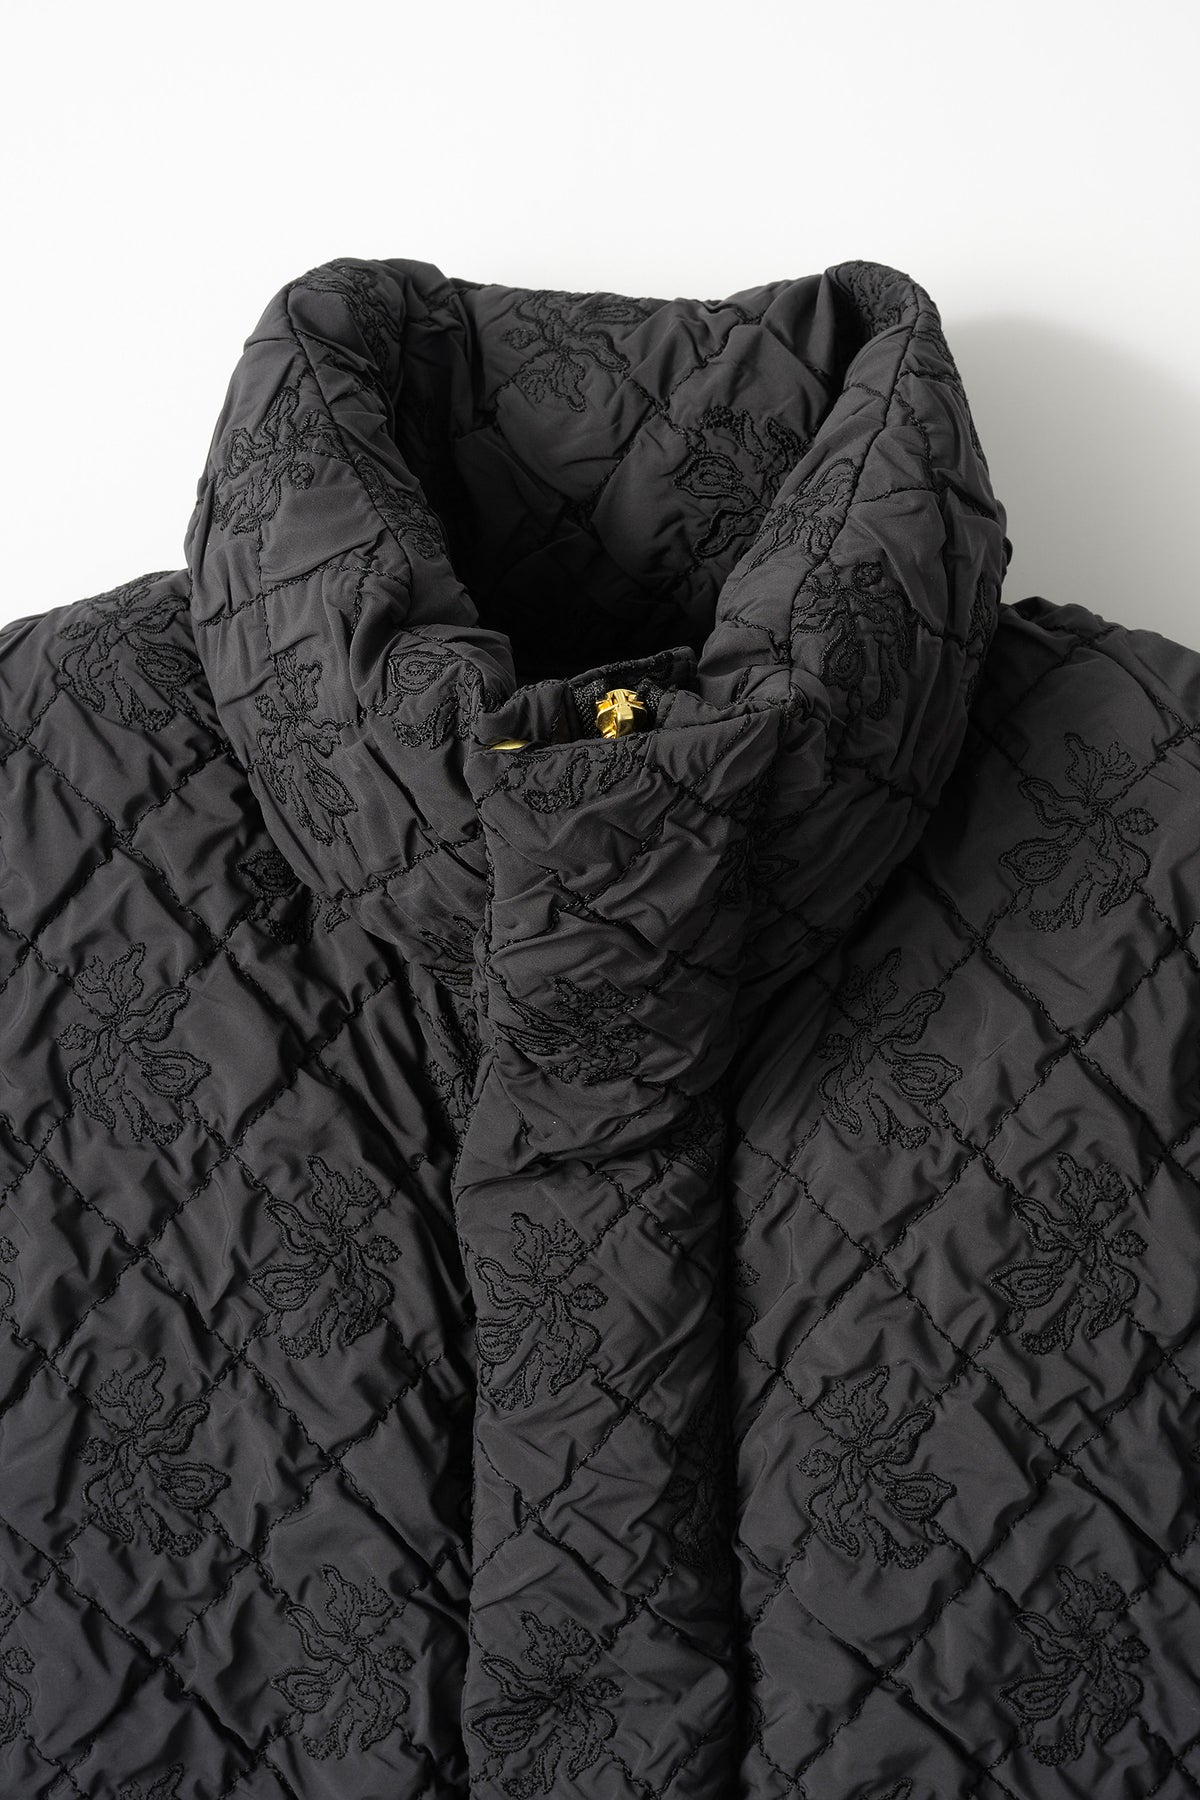 Dahlia shrinking embroidery down jacket (Black)